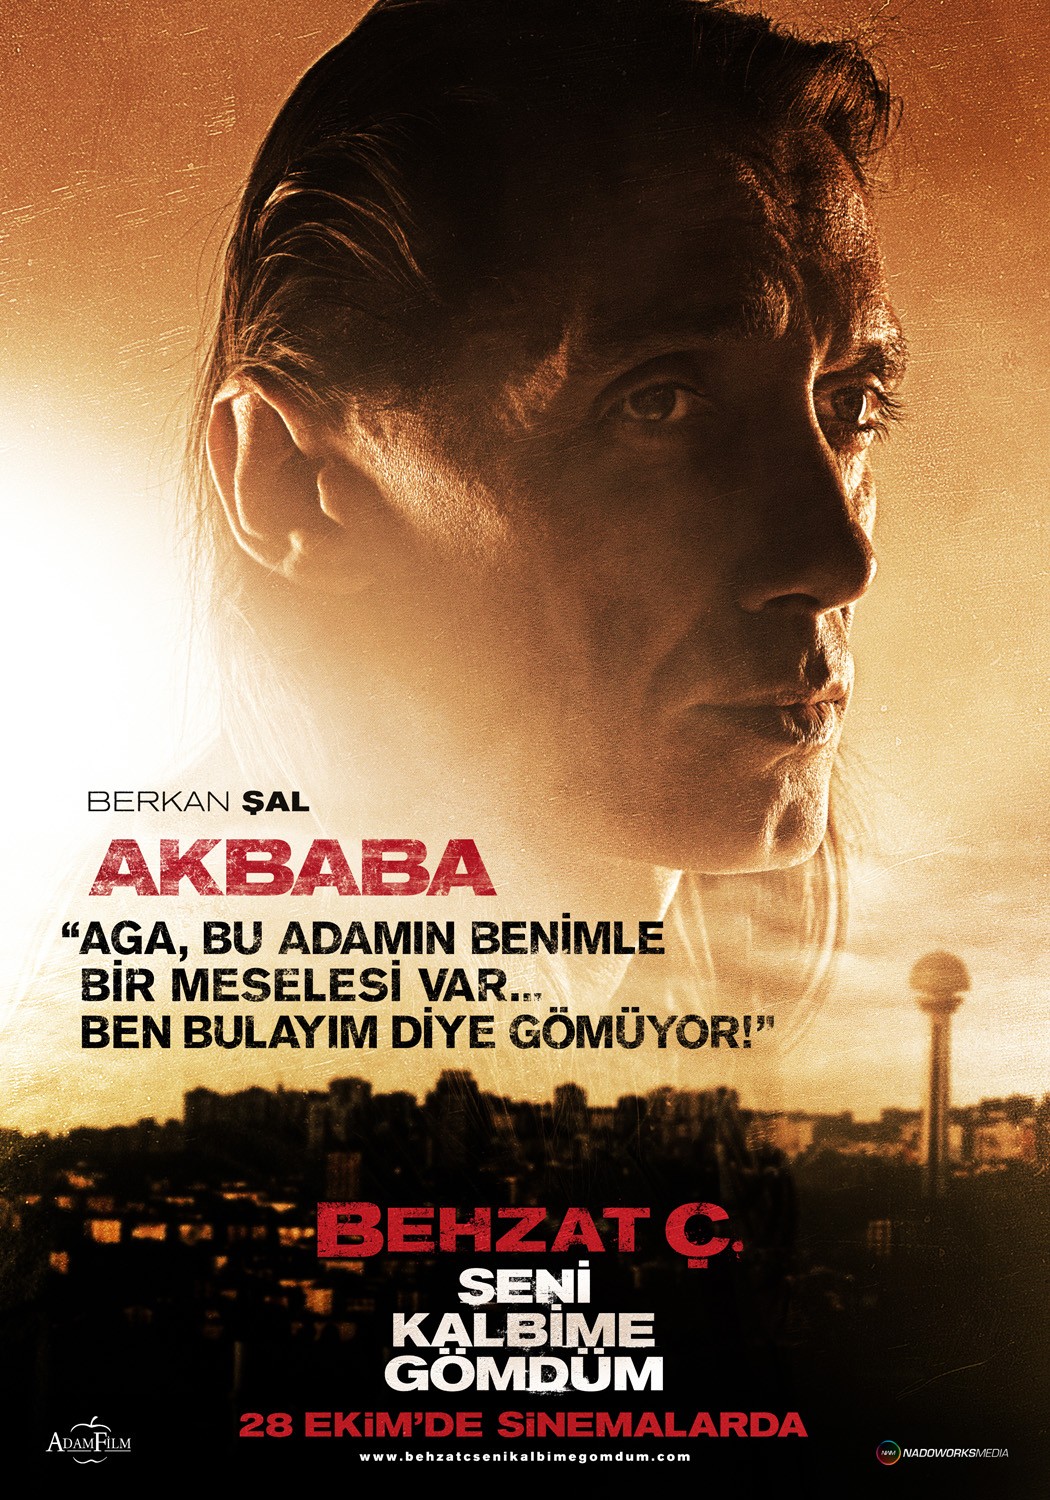 Extra Large Movie Poster Image for Behzat Ç - Seni Kalbime Gömdüm (#5 of 12)